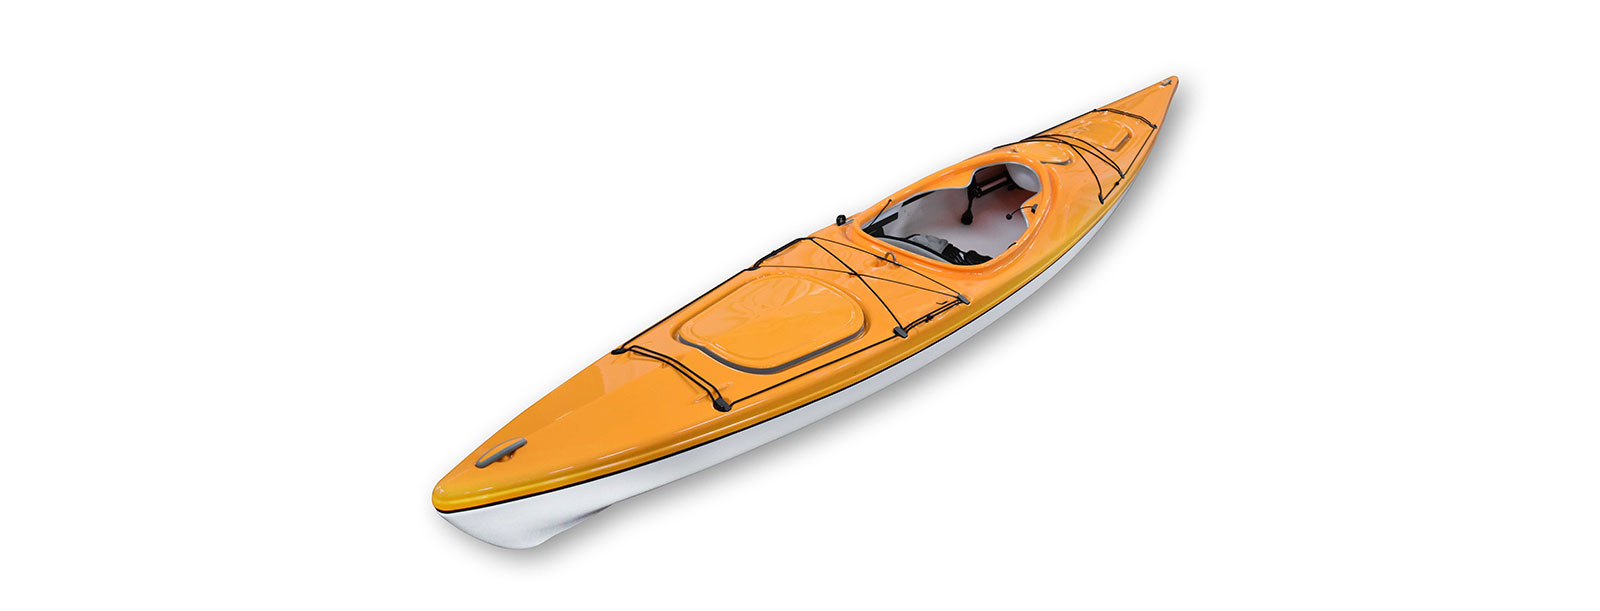 customized single seat kayak products